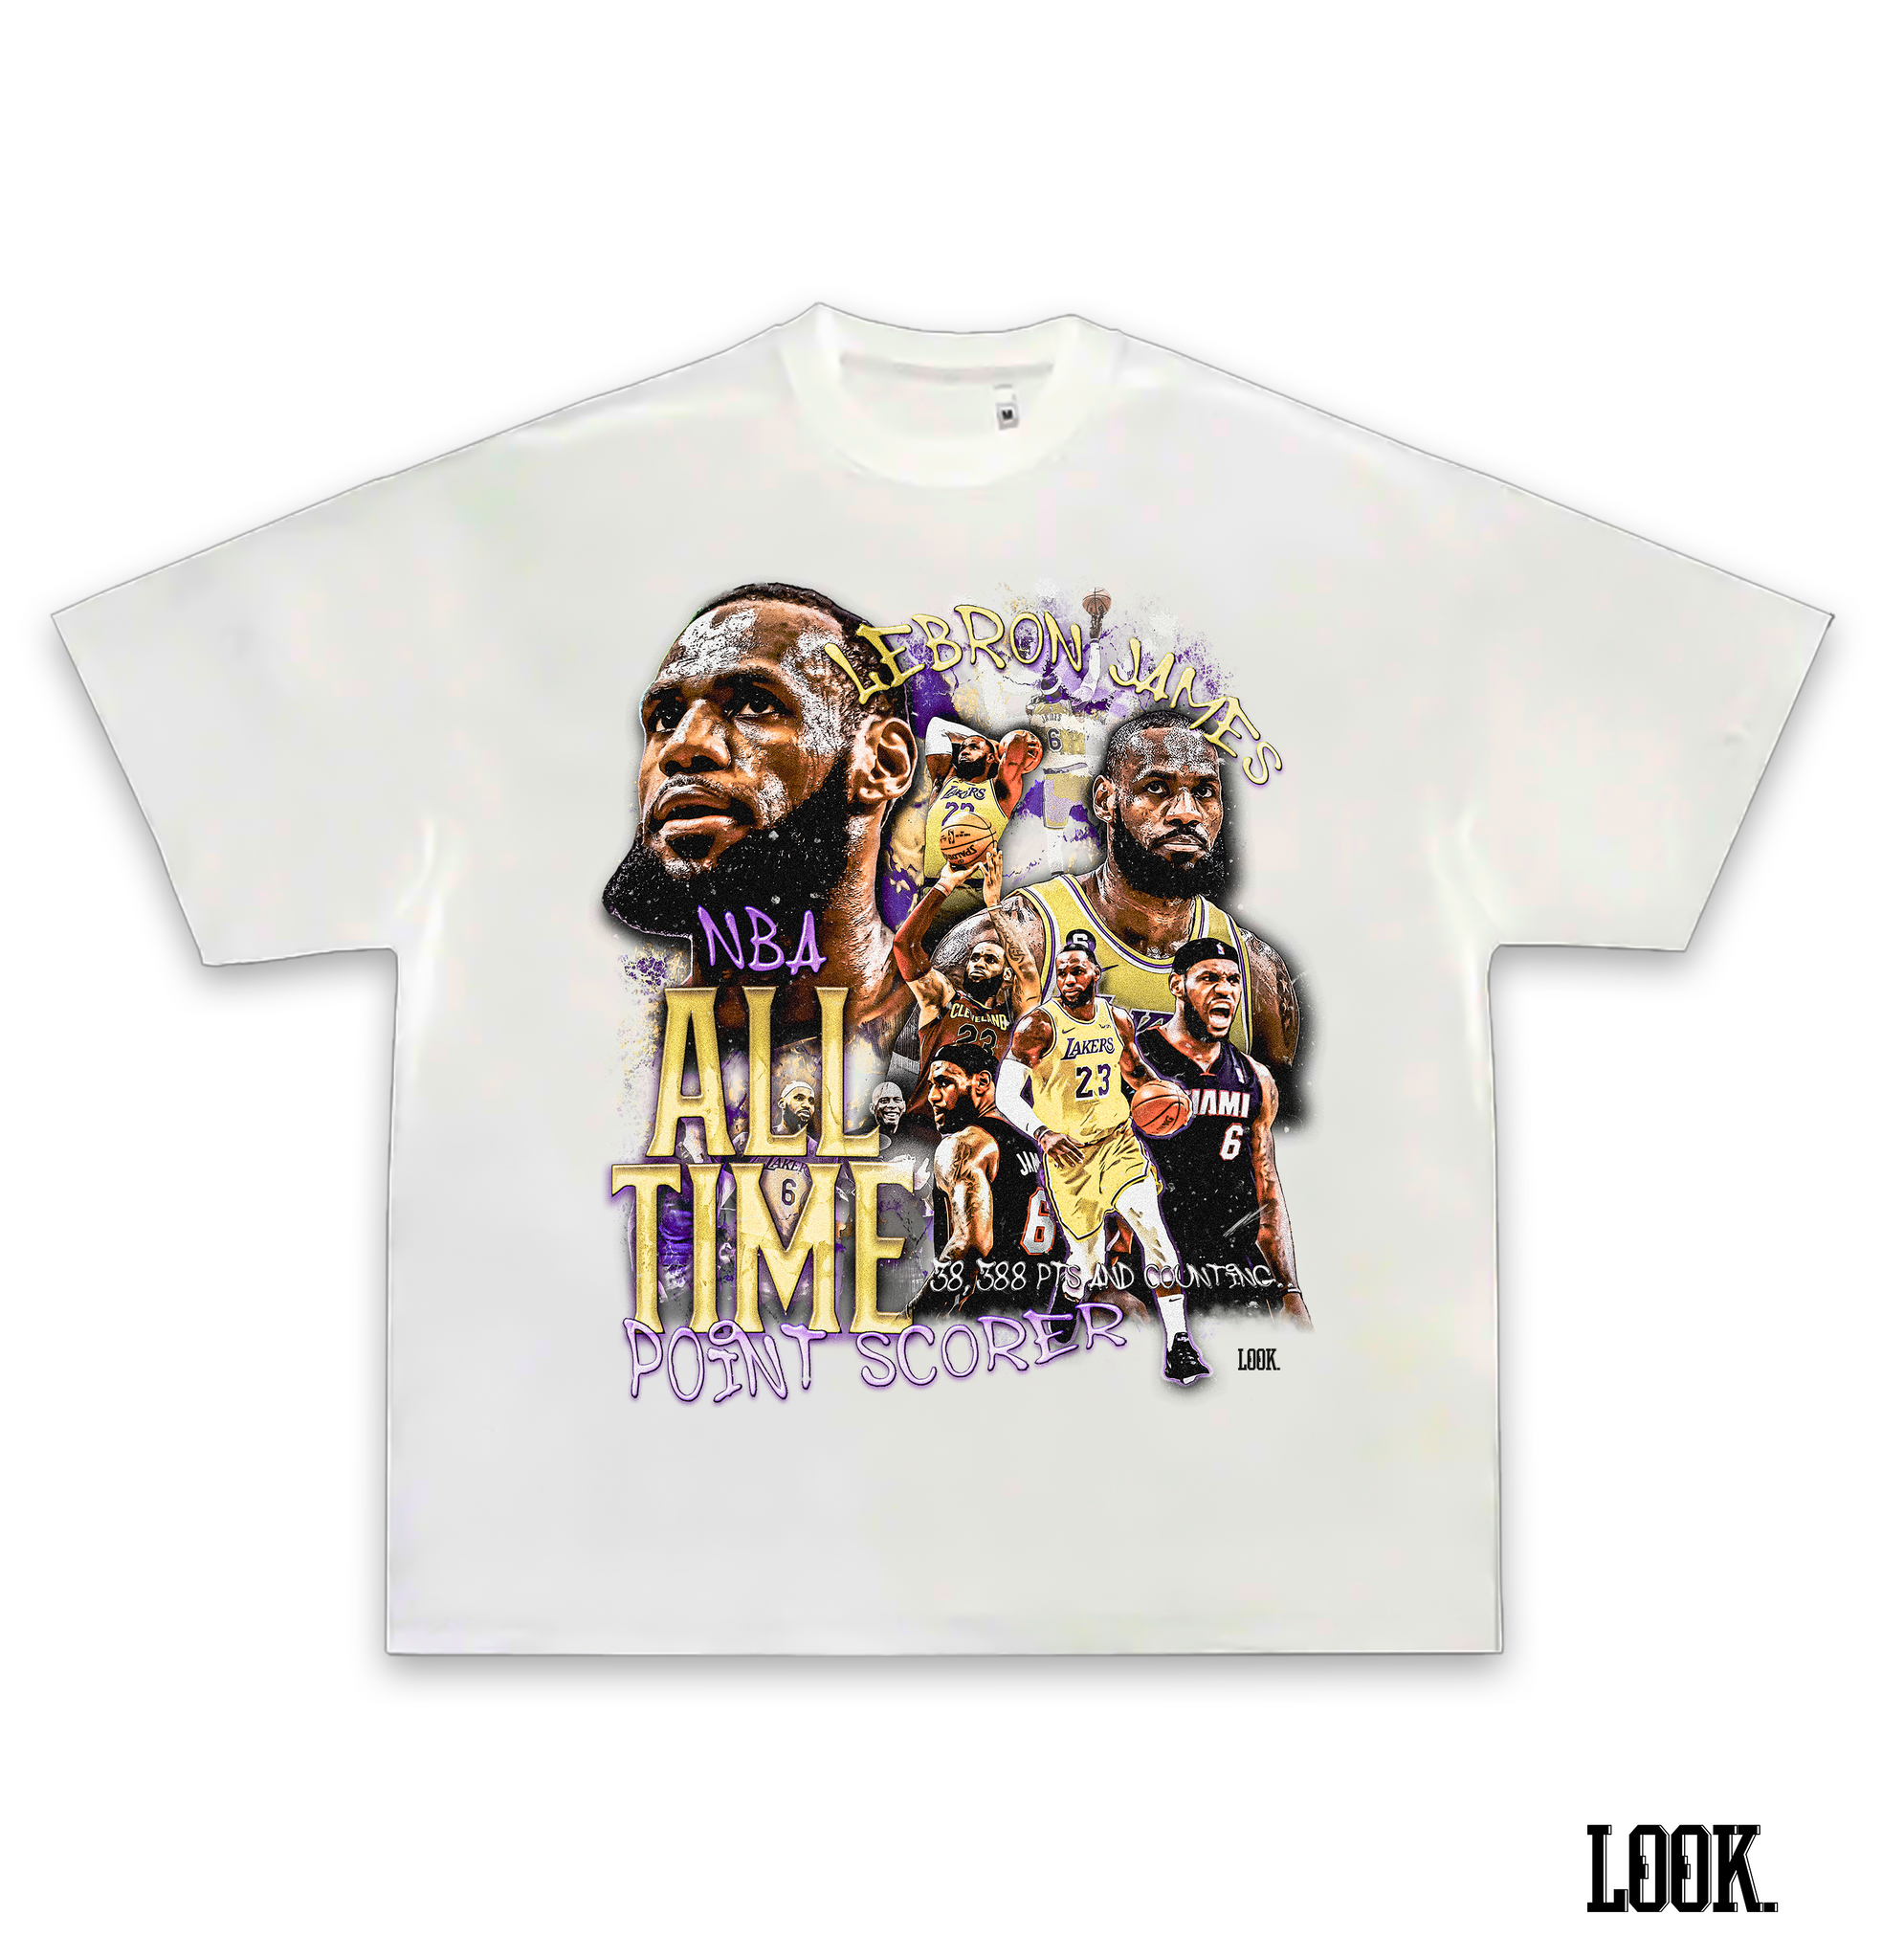 LeBron James Graphic T-Shirts.